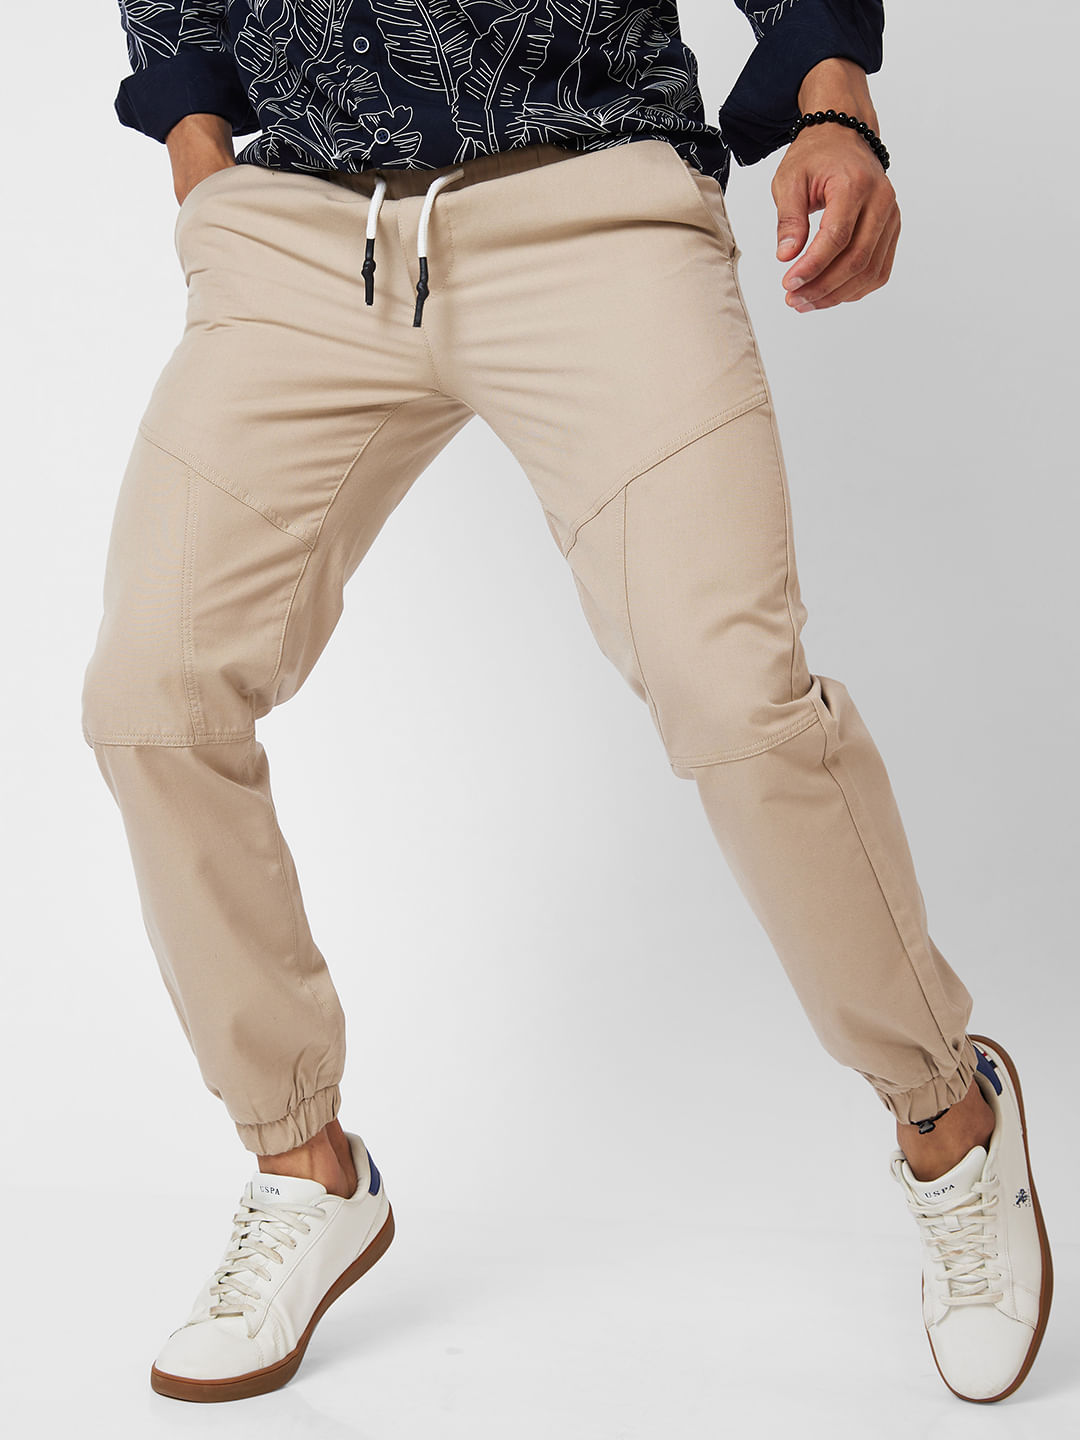 Joggers for Men - Buy Stylish Jogger Pants for Men Online